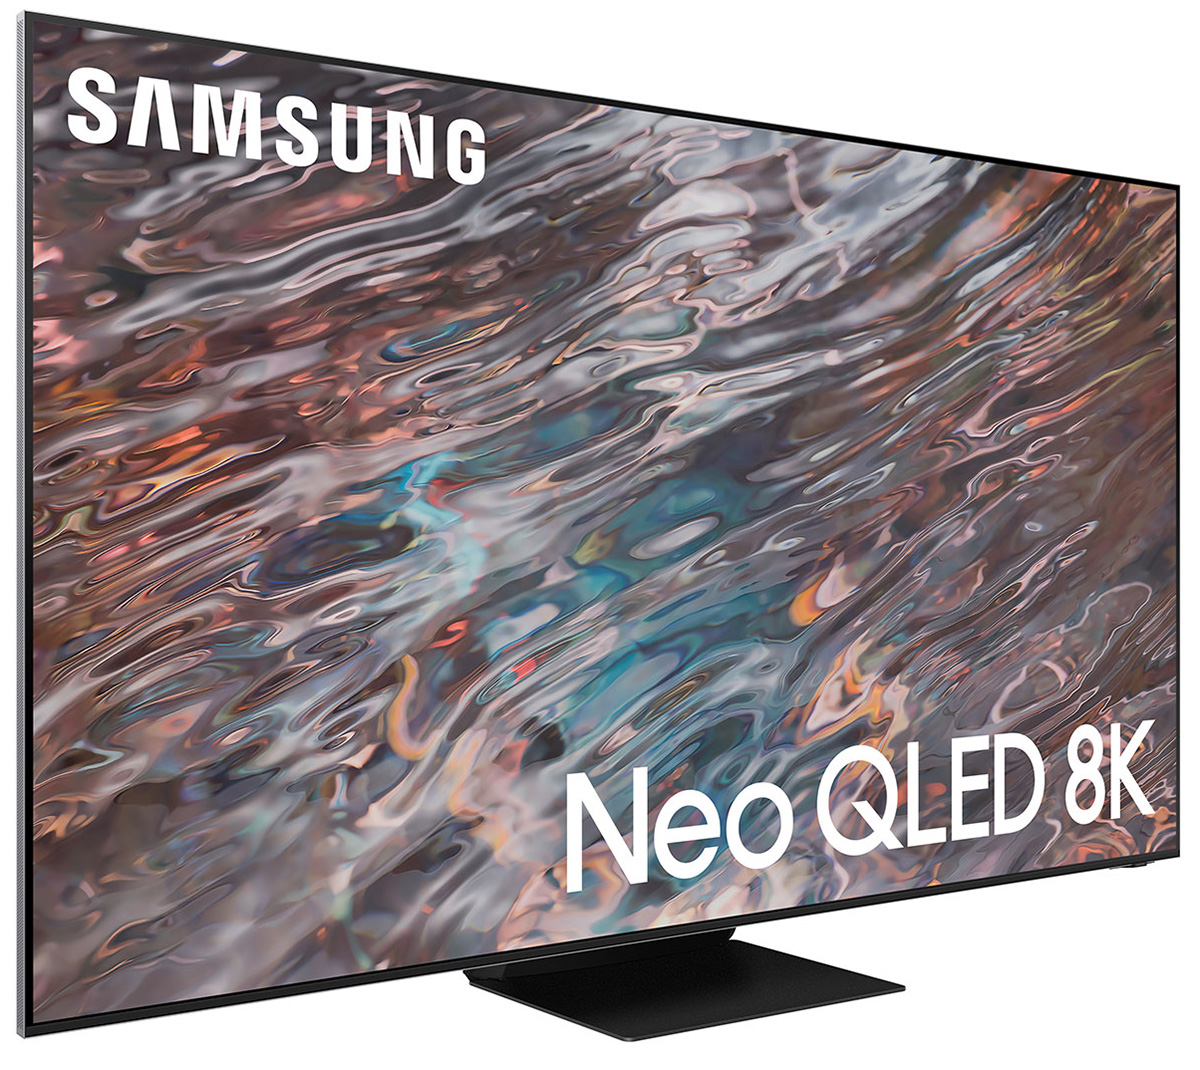 QN800A TV from Samsung: QLED 8K resolution